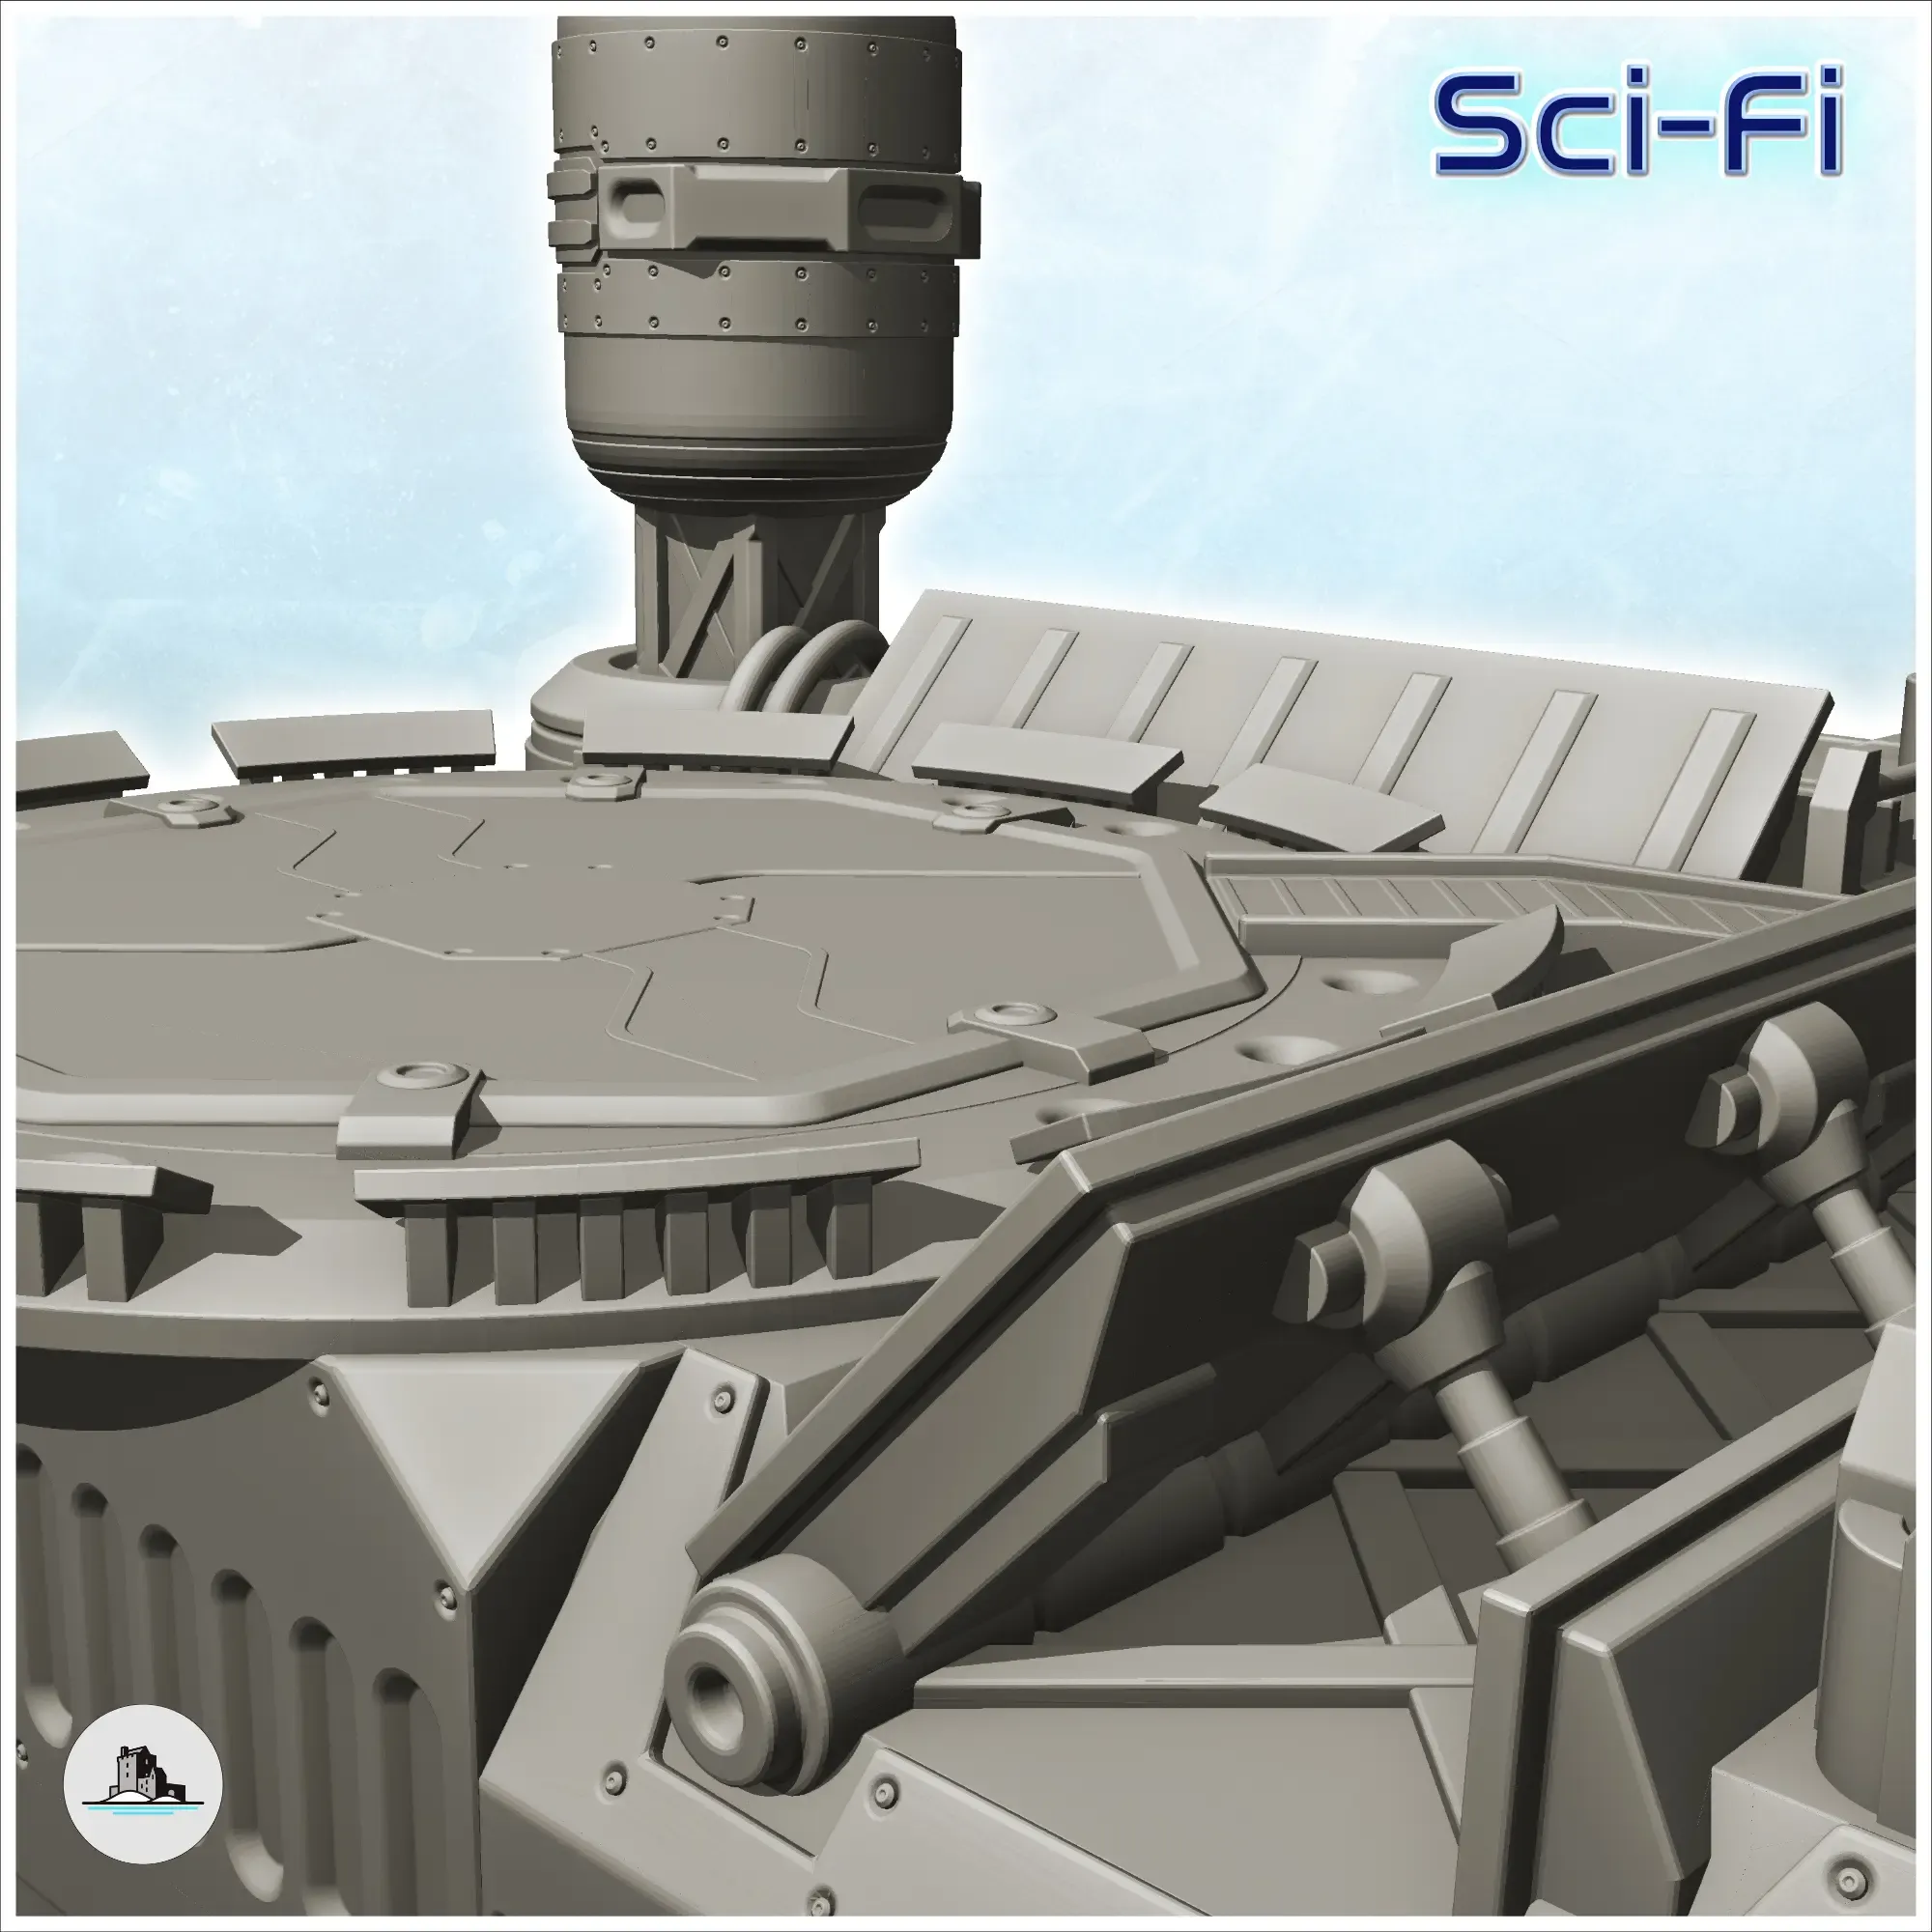 Reinforced command base - Terrain Scifi Science fiction SF